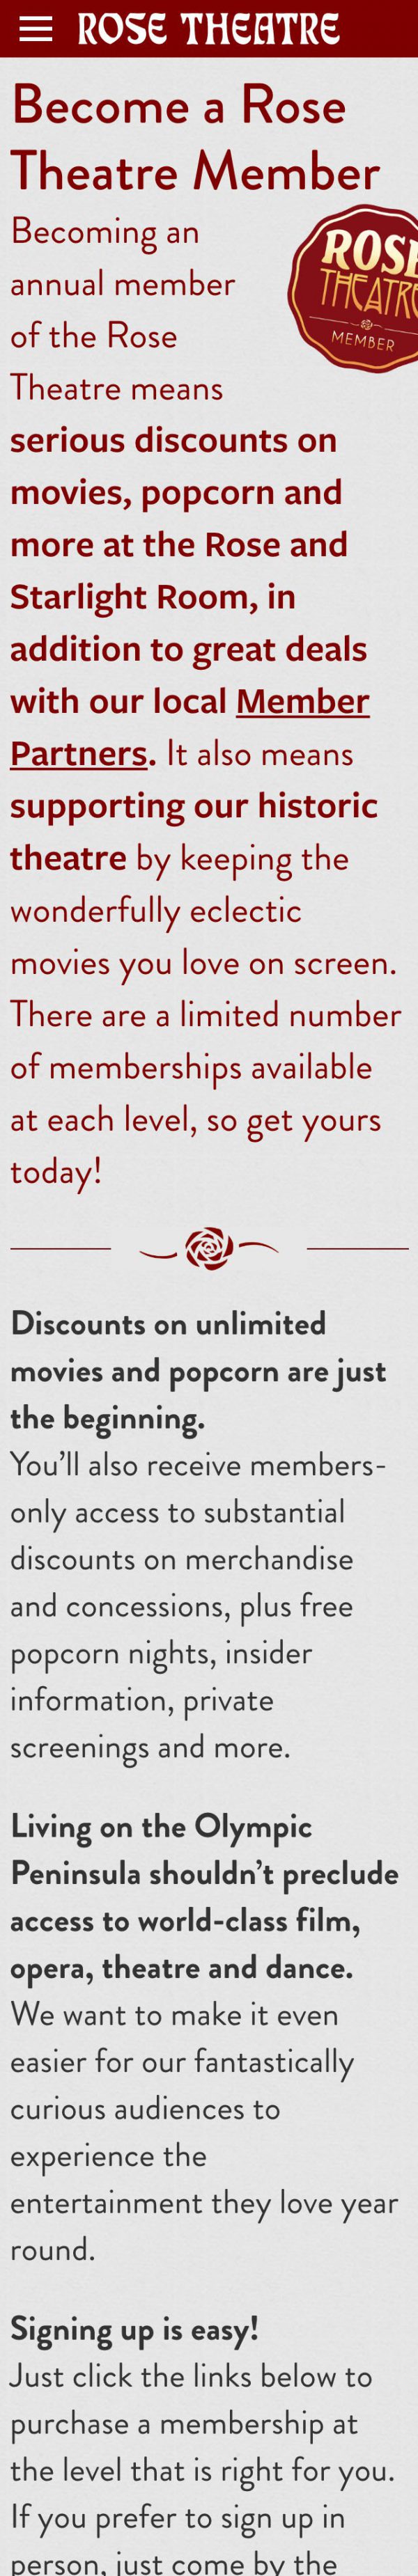 Screenshot of the Rose Theatre mobile website's Membership landing page